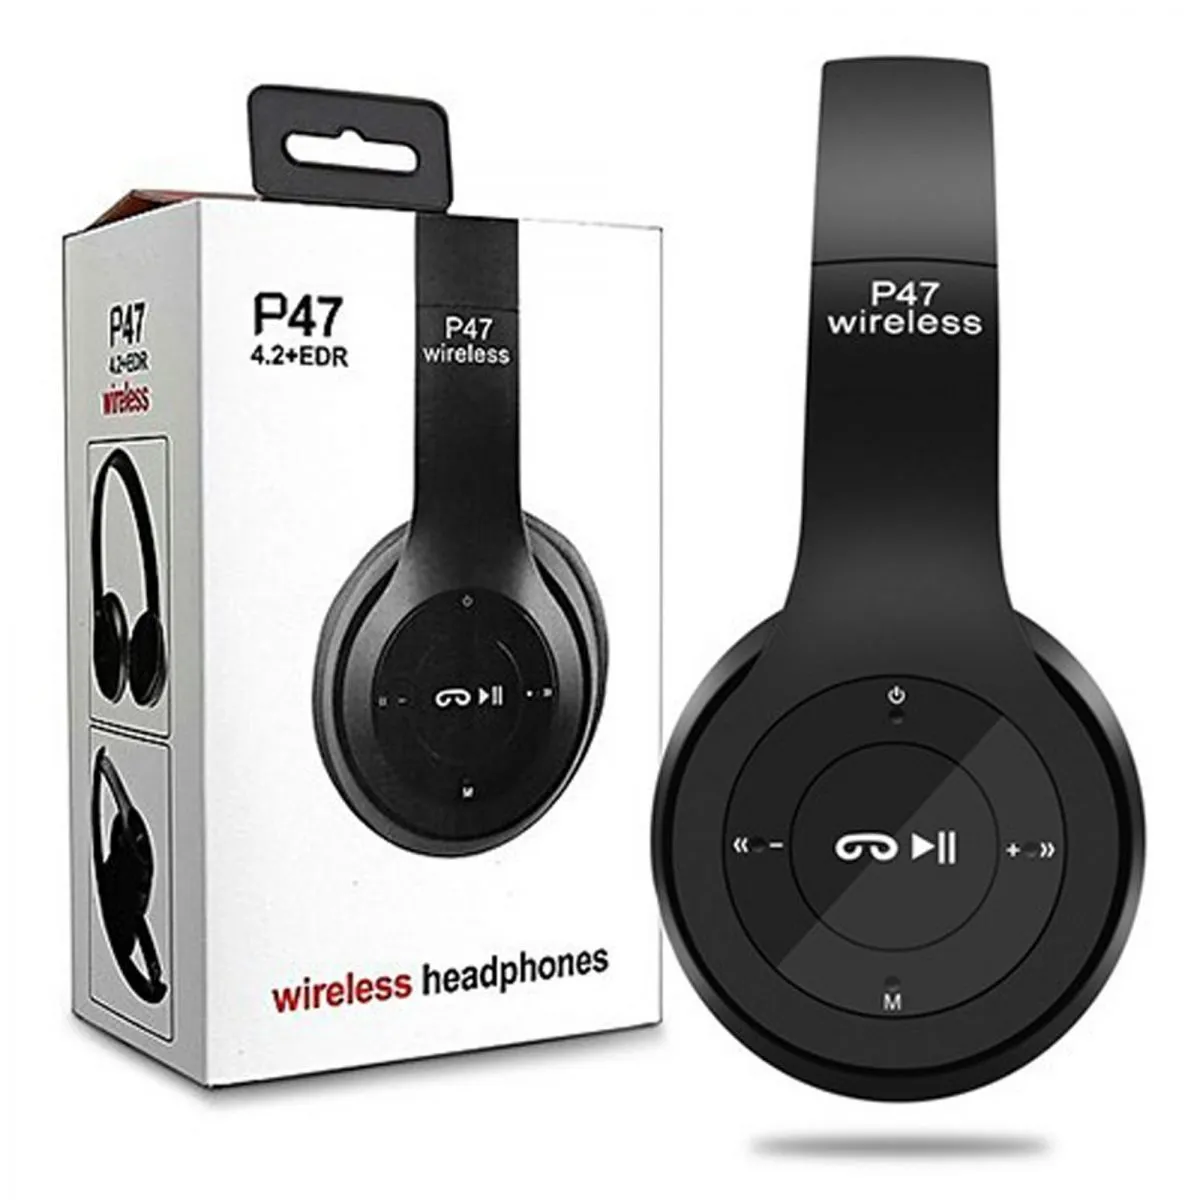 Buy P47 Wireless Headphone at best price in Pakistan | Rhizmall.pk